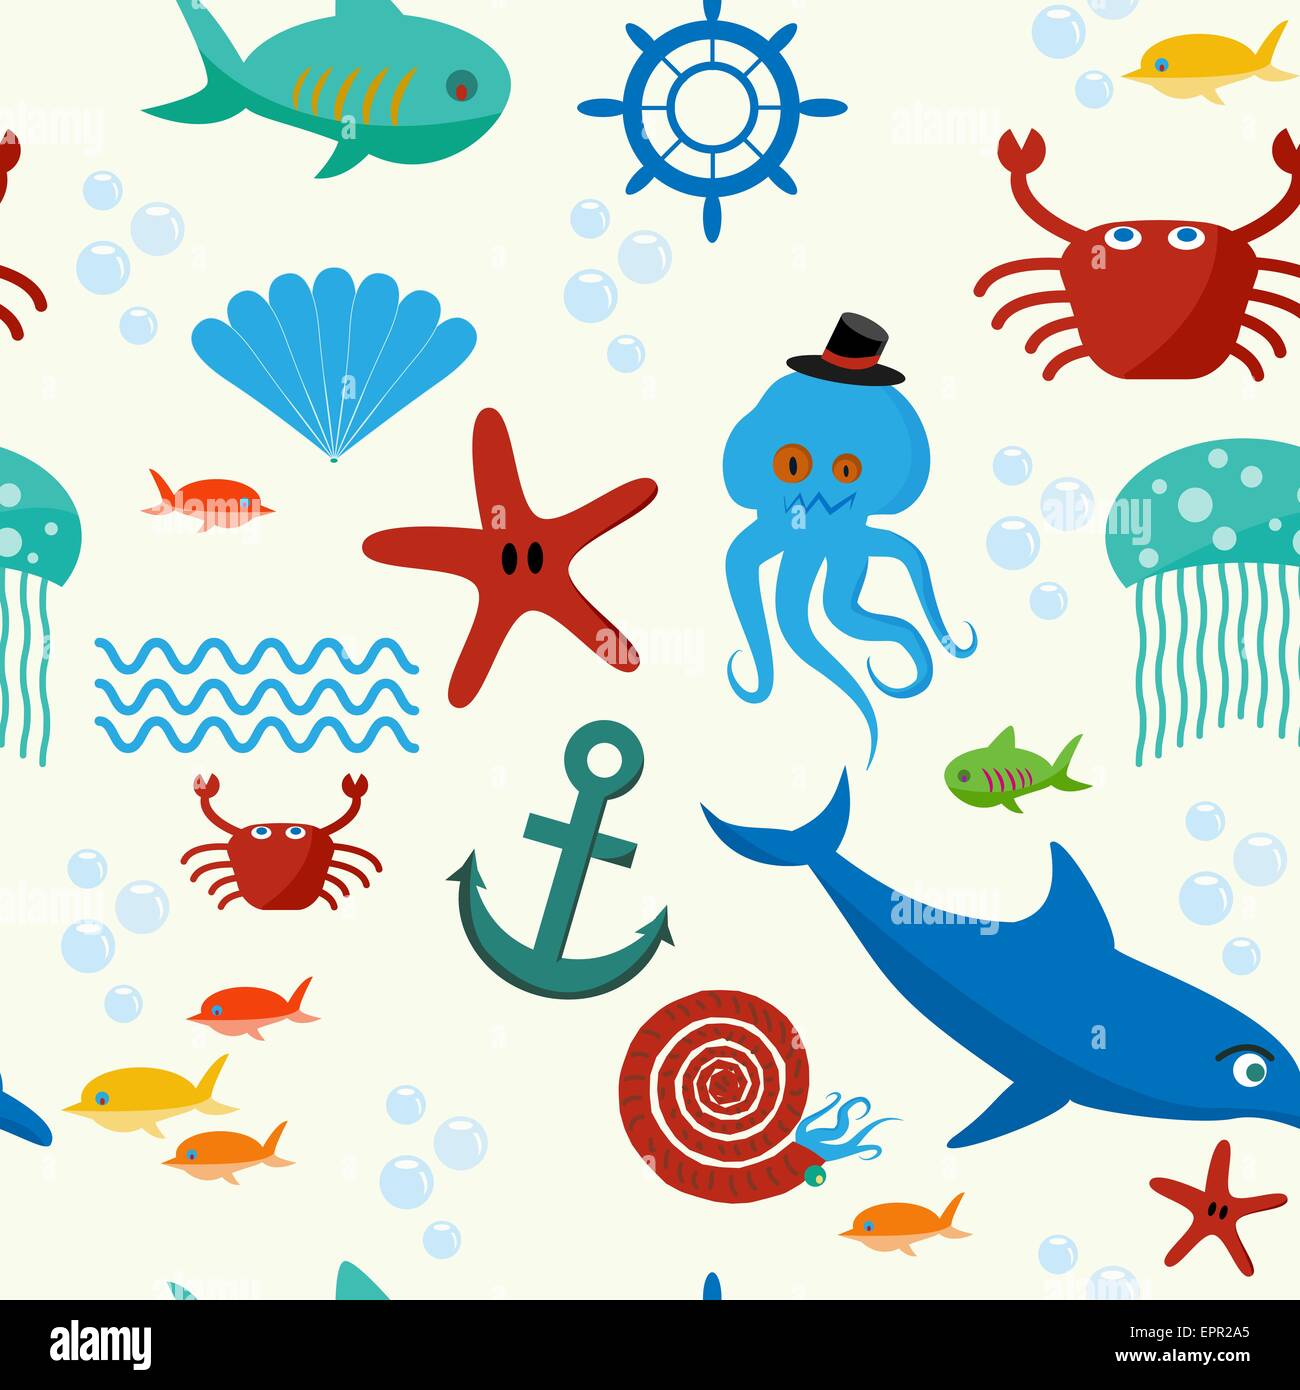 Sea Creatures Wallpaper Stock Illustrations  2124 Sea Creatures Wallpaper  Stock Illustrations Vectors  Clipart  Dreamstime